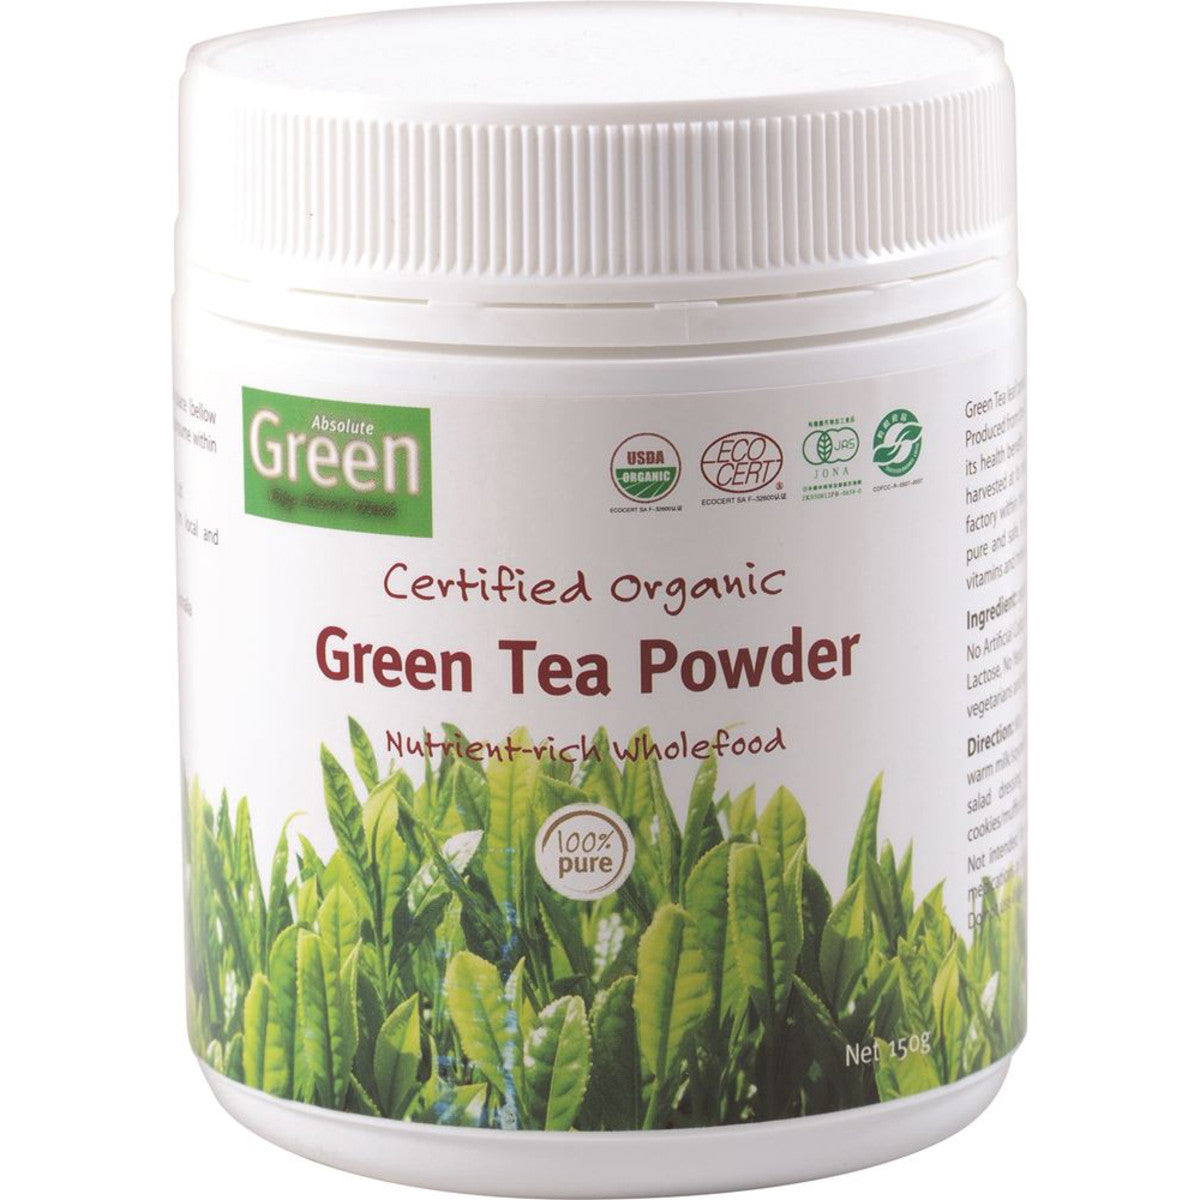 Absolute Green Green Tea Powder 150g, Certified Organic